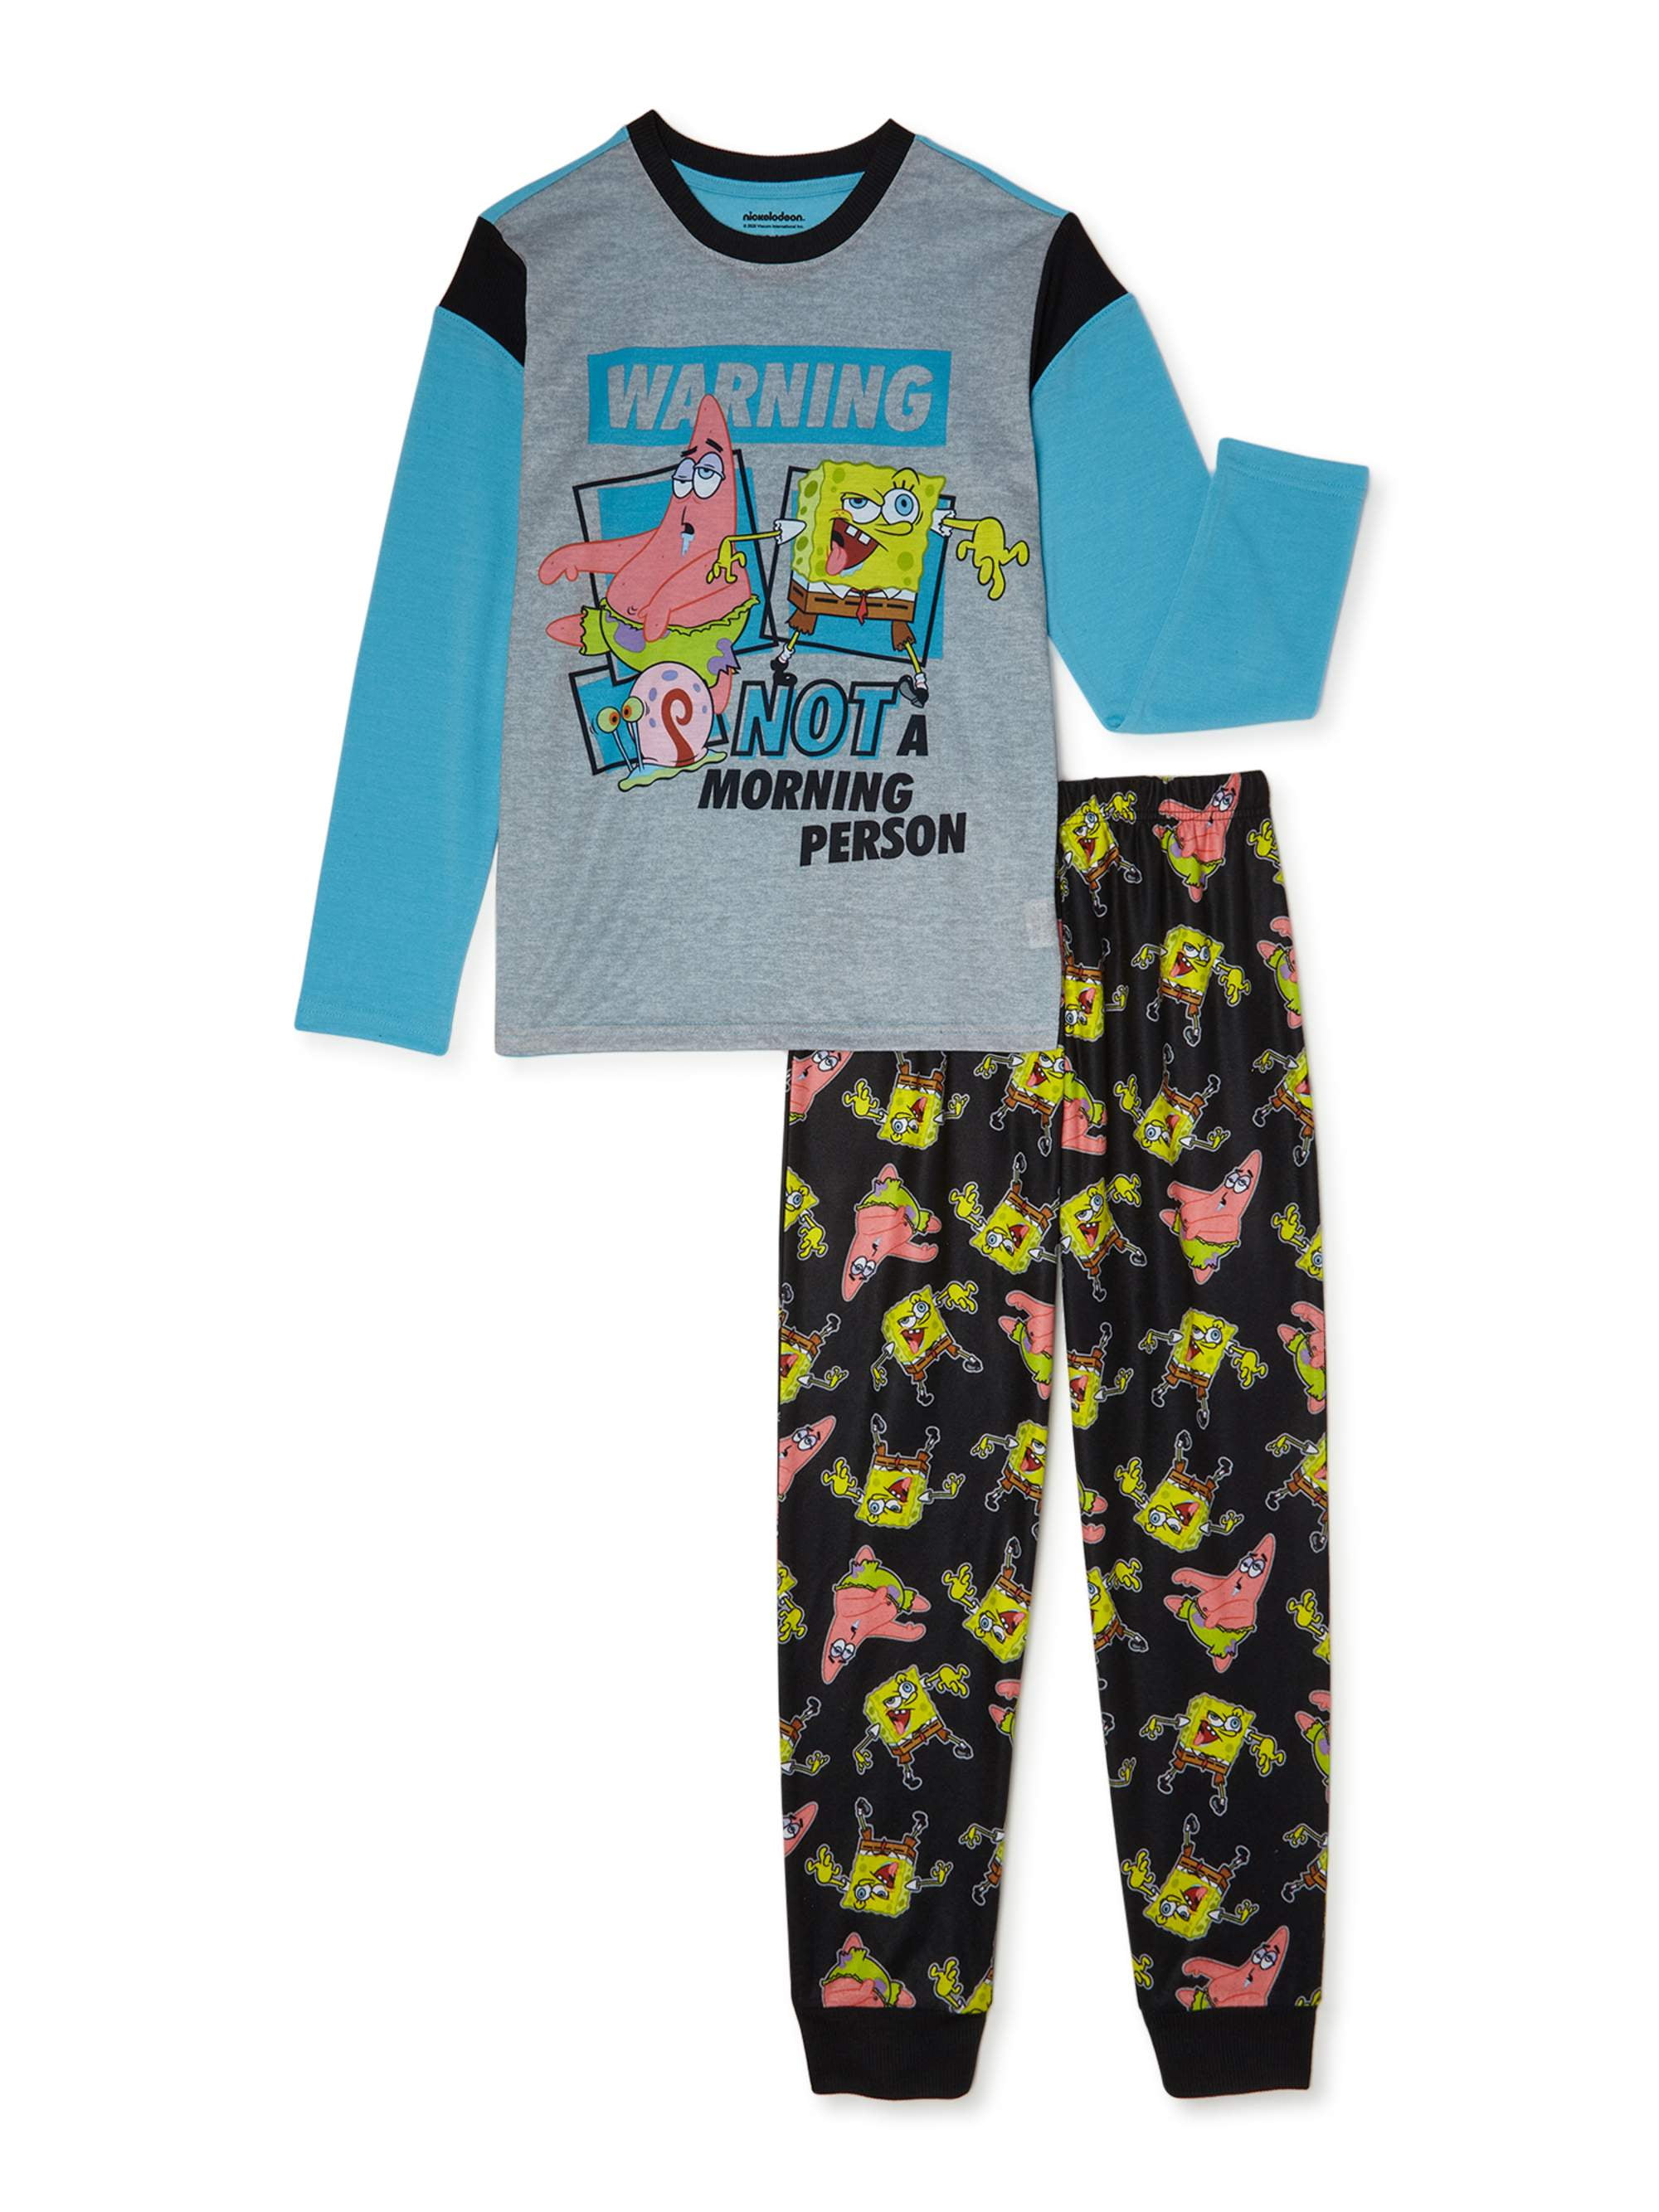 Spongebob Squarepants Pajamas Sleepwear 2pc Set Boys 4 6 8 10 12 New